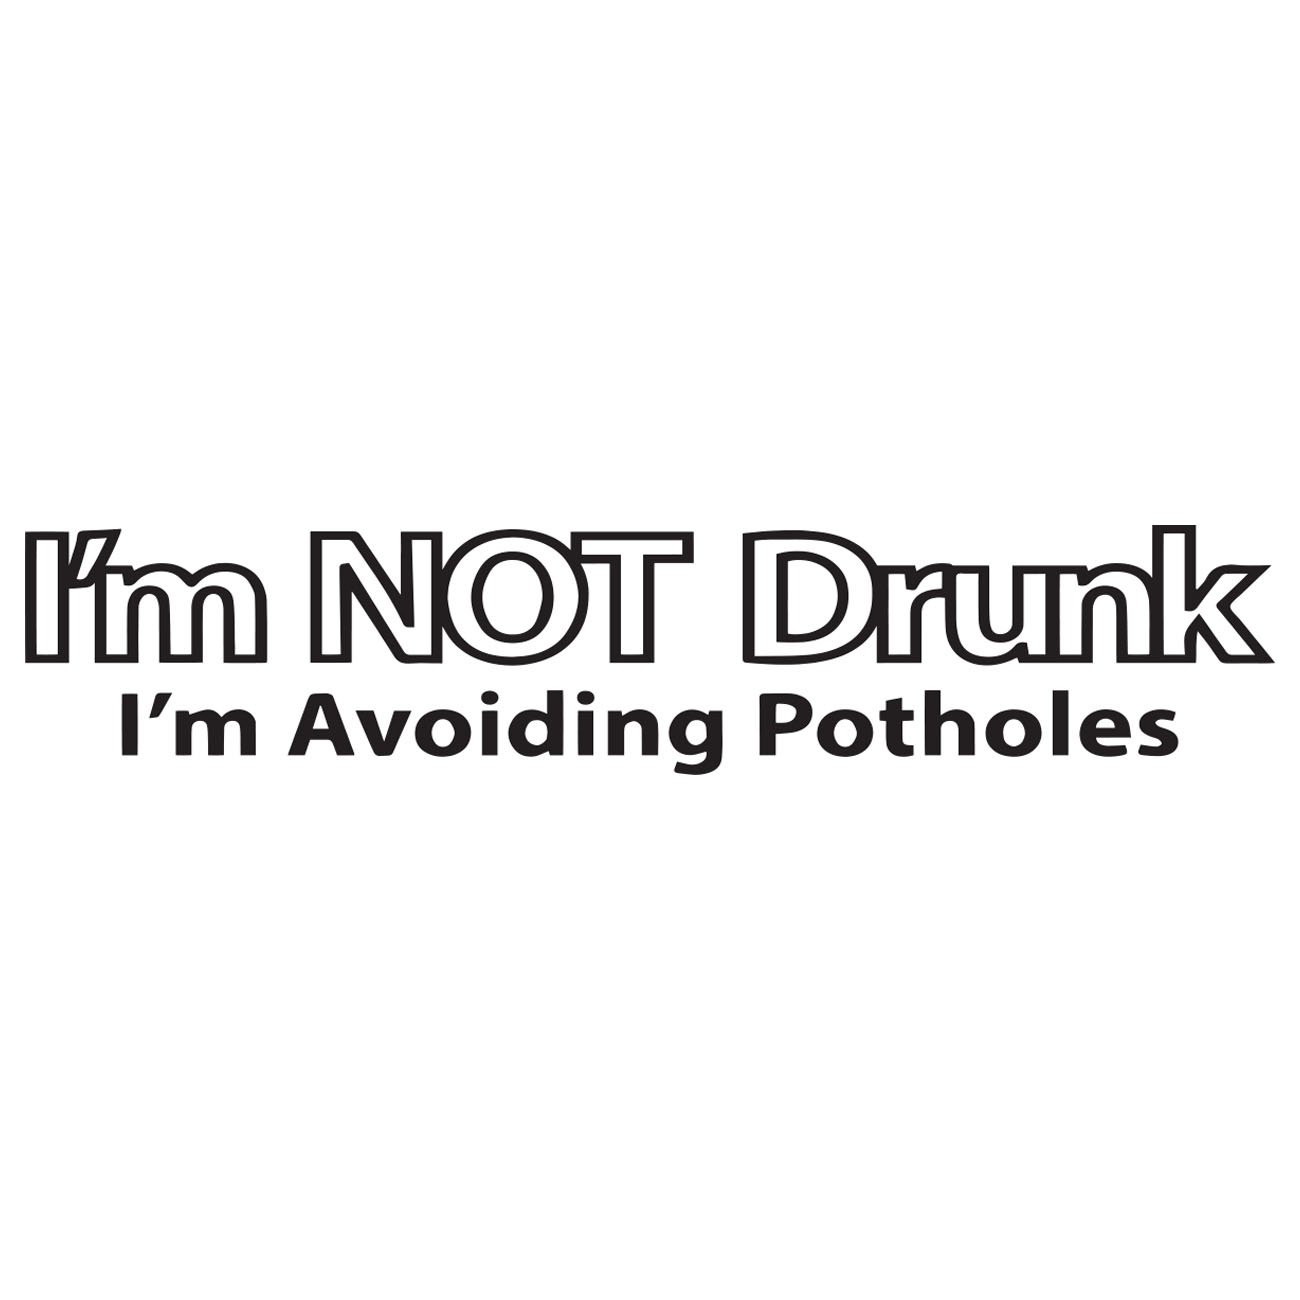 Im not drunk - Im avoiding potholes